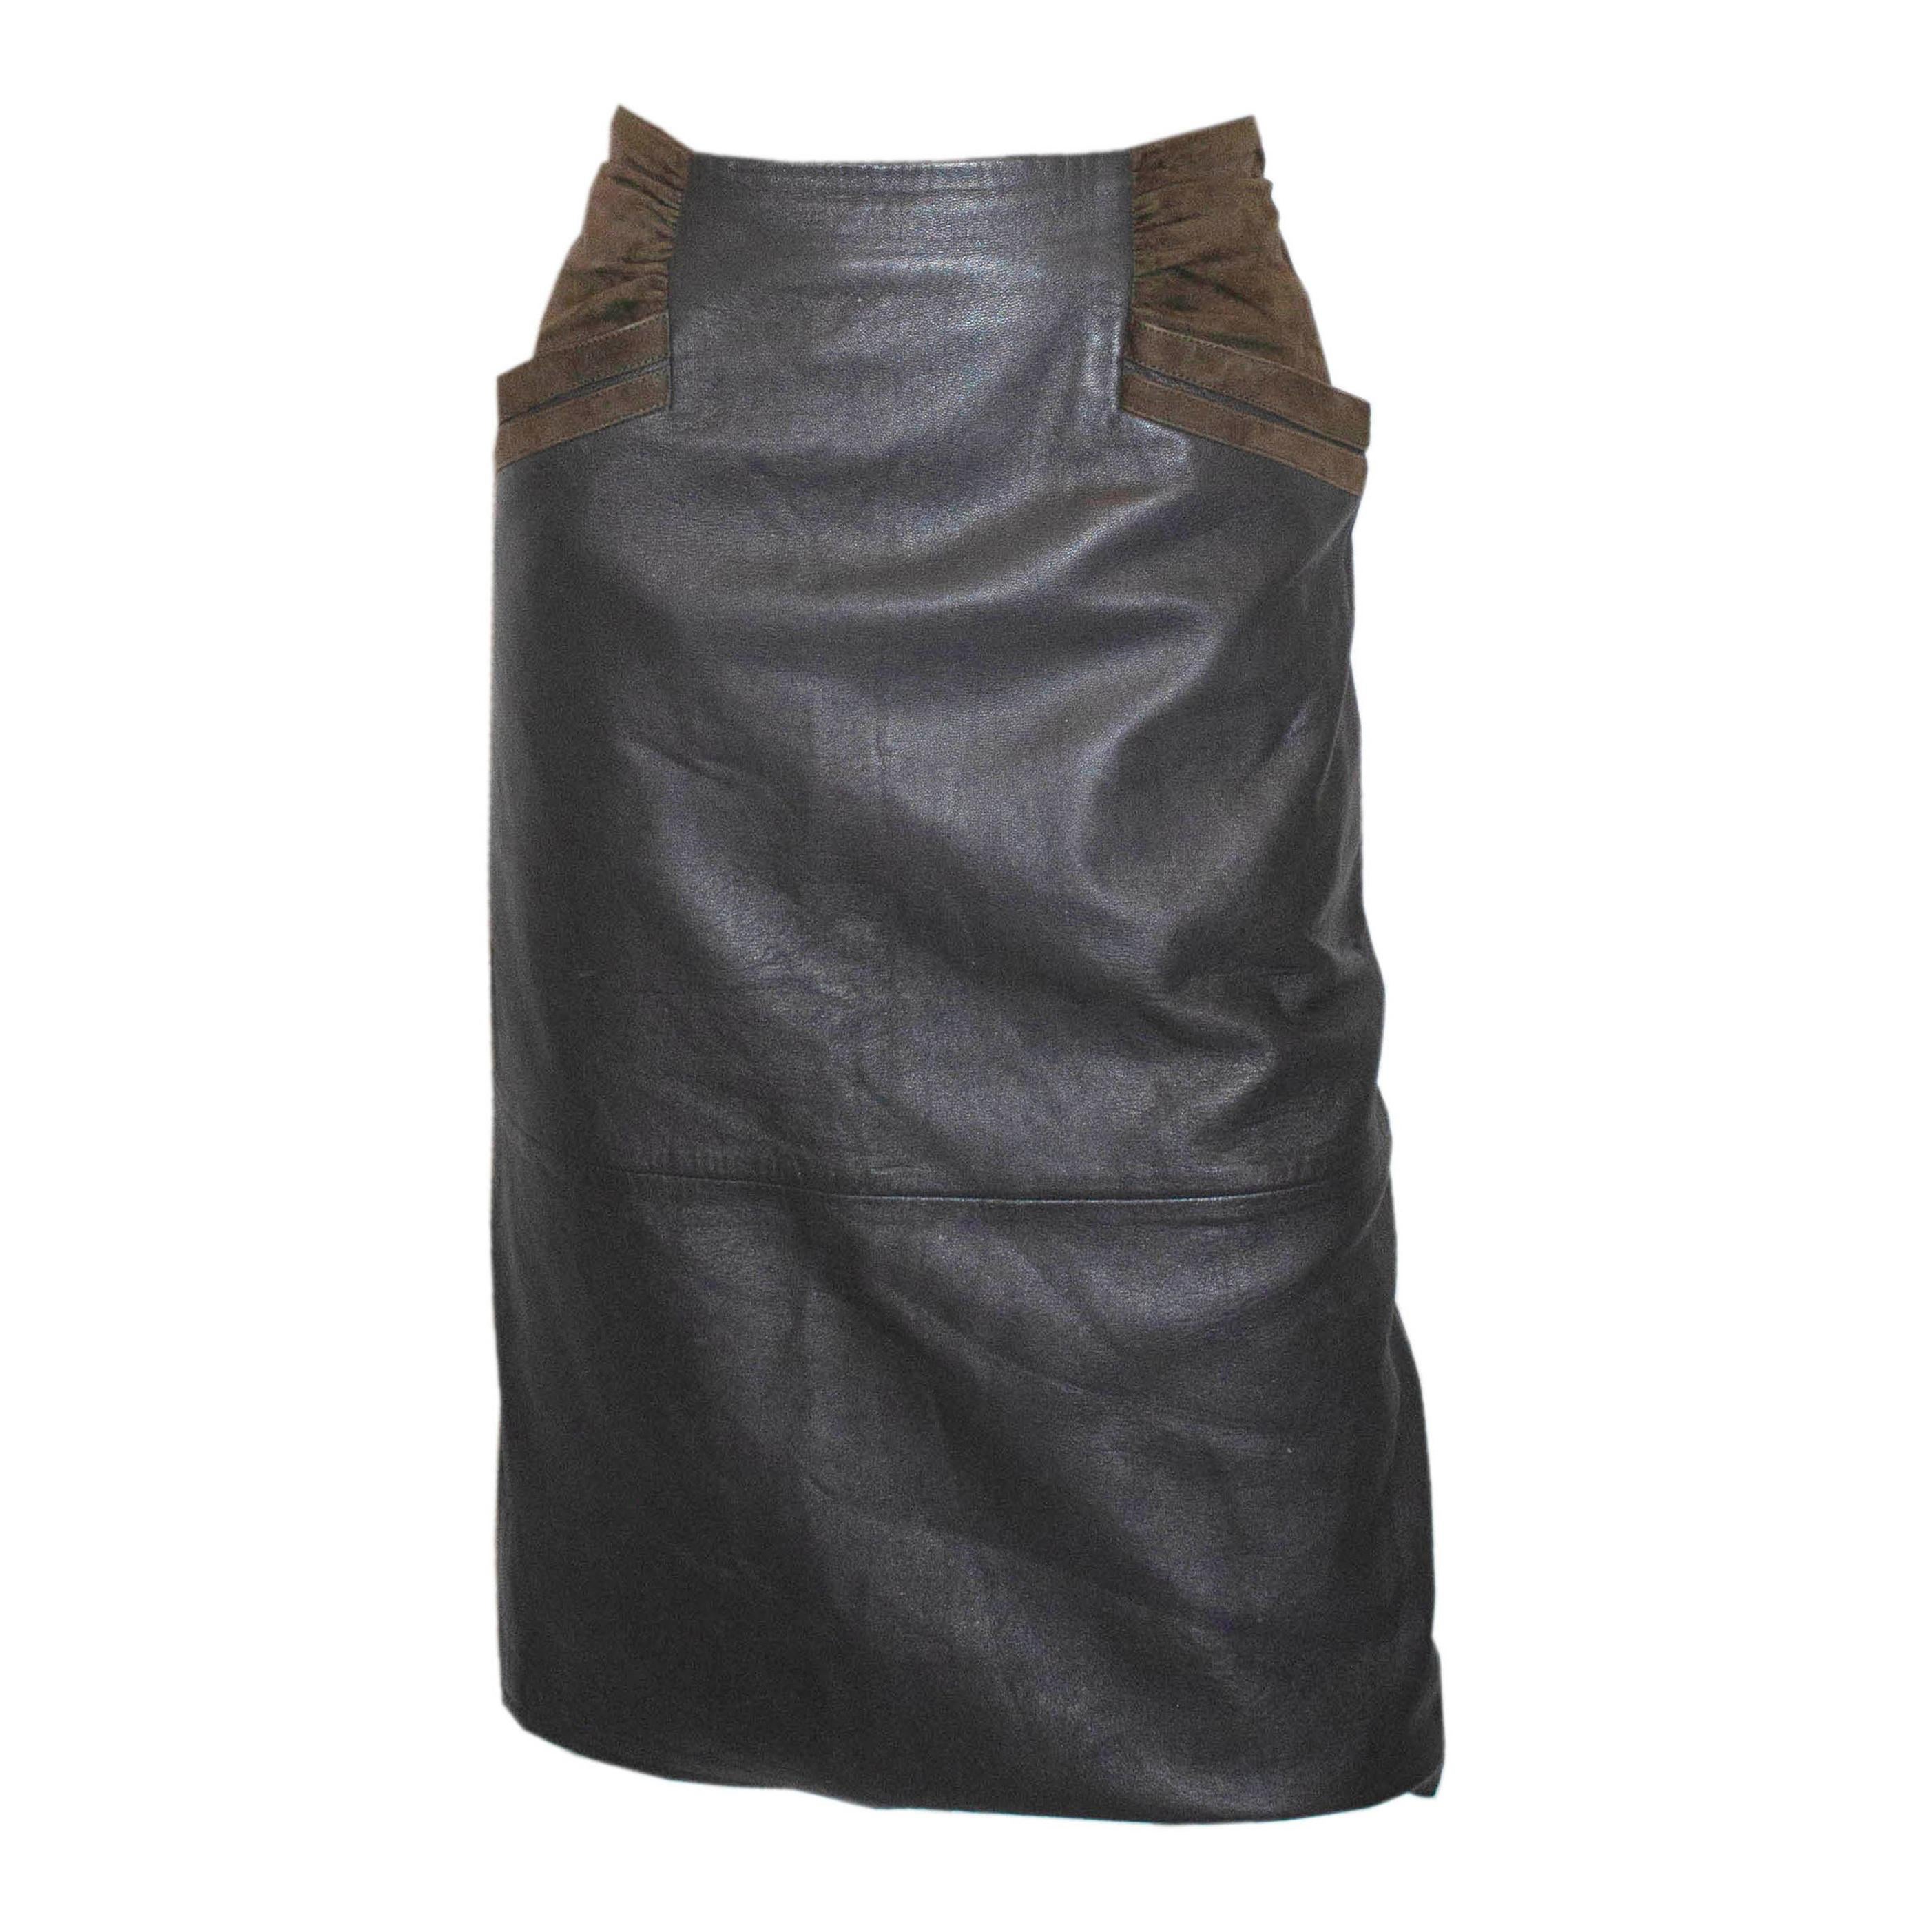 Vintage Leather Skirt by Robert Mariotti